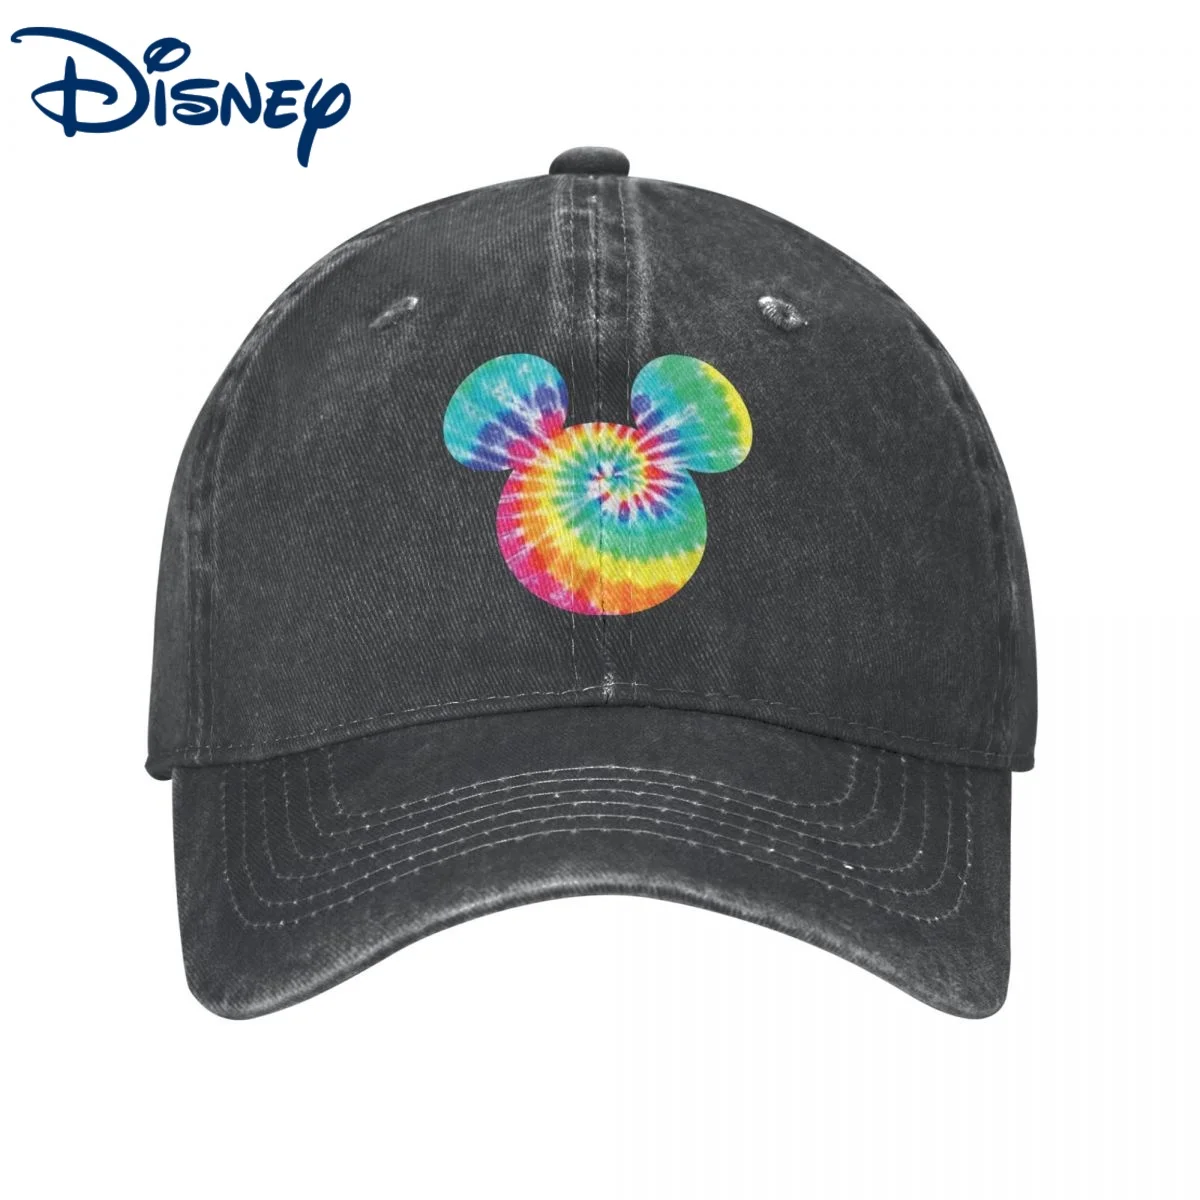 

Disney Mickey Mouse Icon Baseball Cap Vintage Distressed Denim Washed Rainbow Tie-Dye Sun Cap Men Women Outdoor Activities Hats